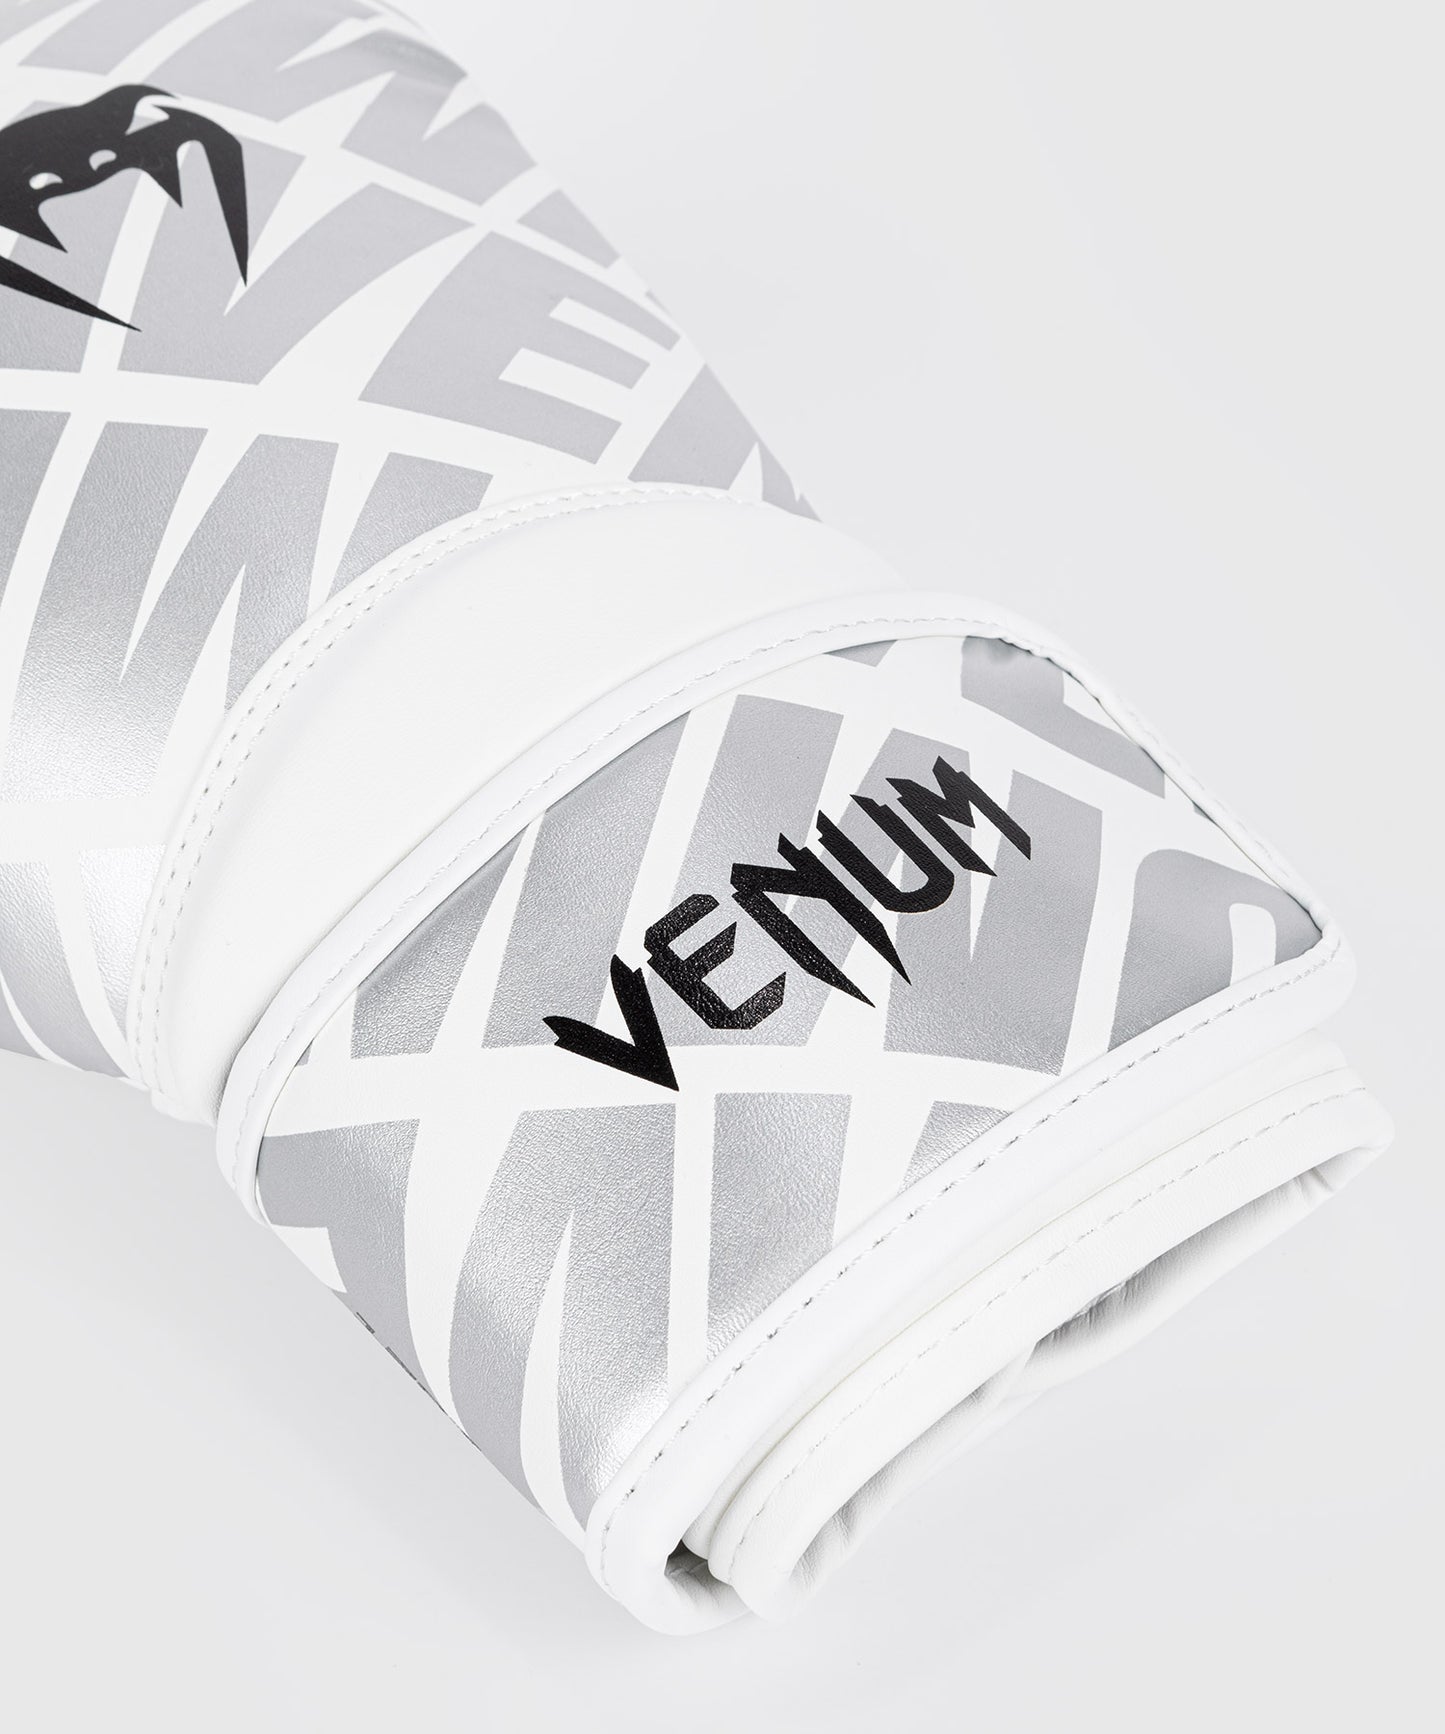 Venum Contender 1.5 XT Boxing Gloves White/Silver